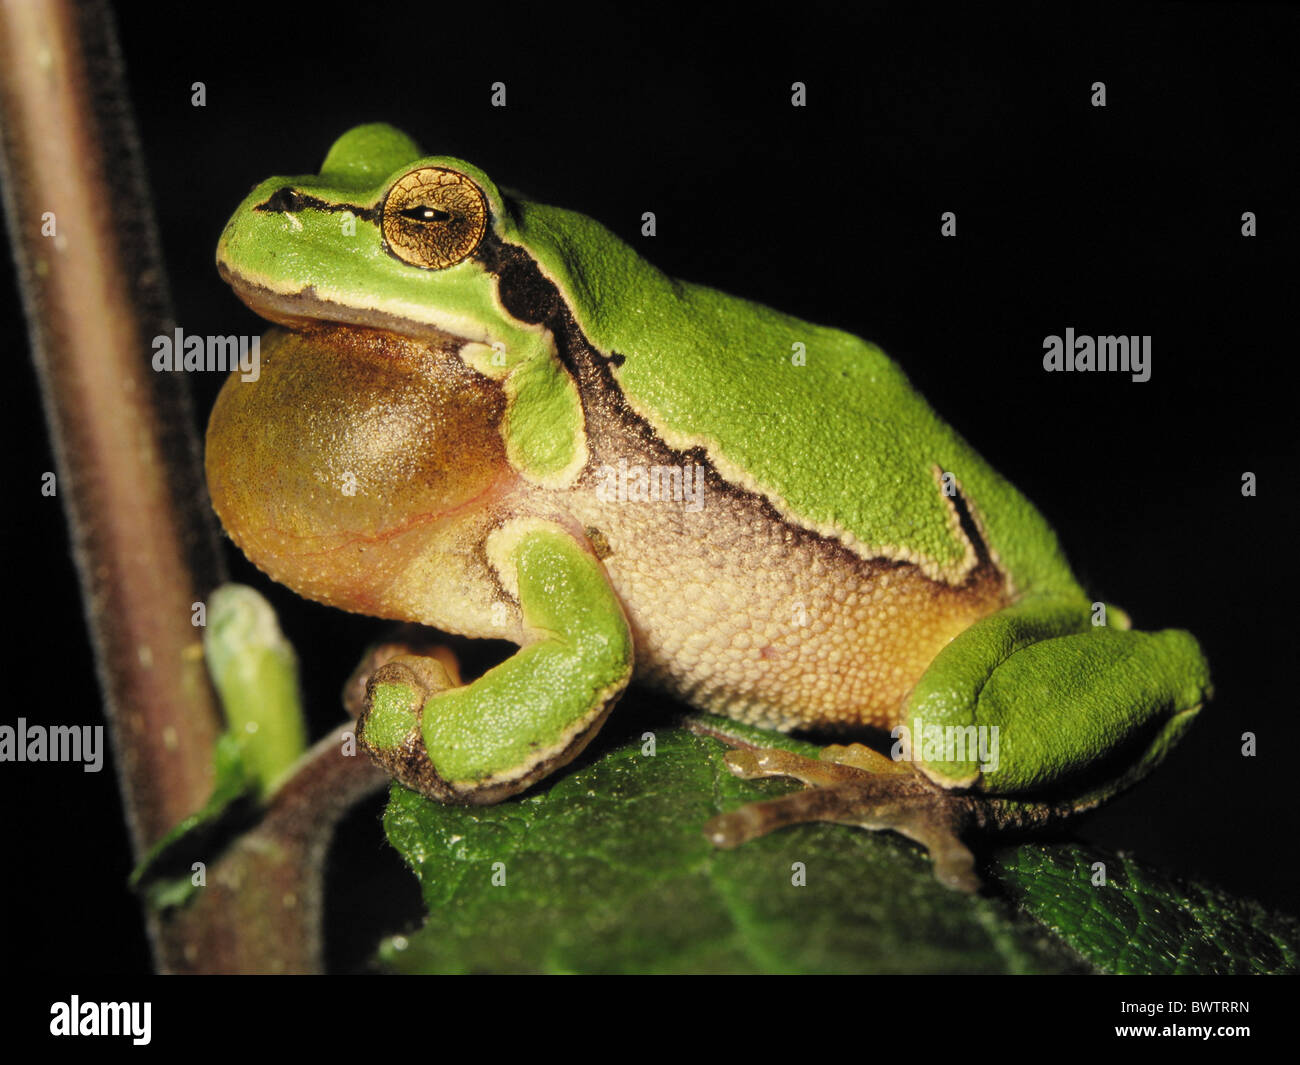 European tree frog Hyla arborea croak at night green croaking vocal sac calling nature Stock Photo